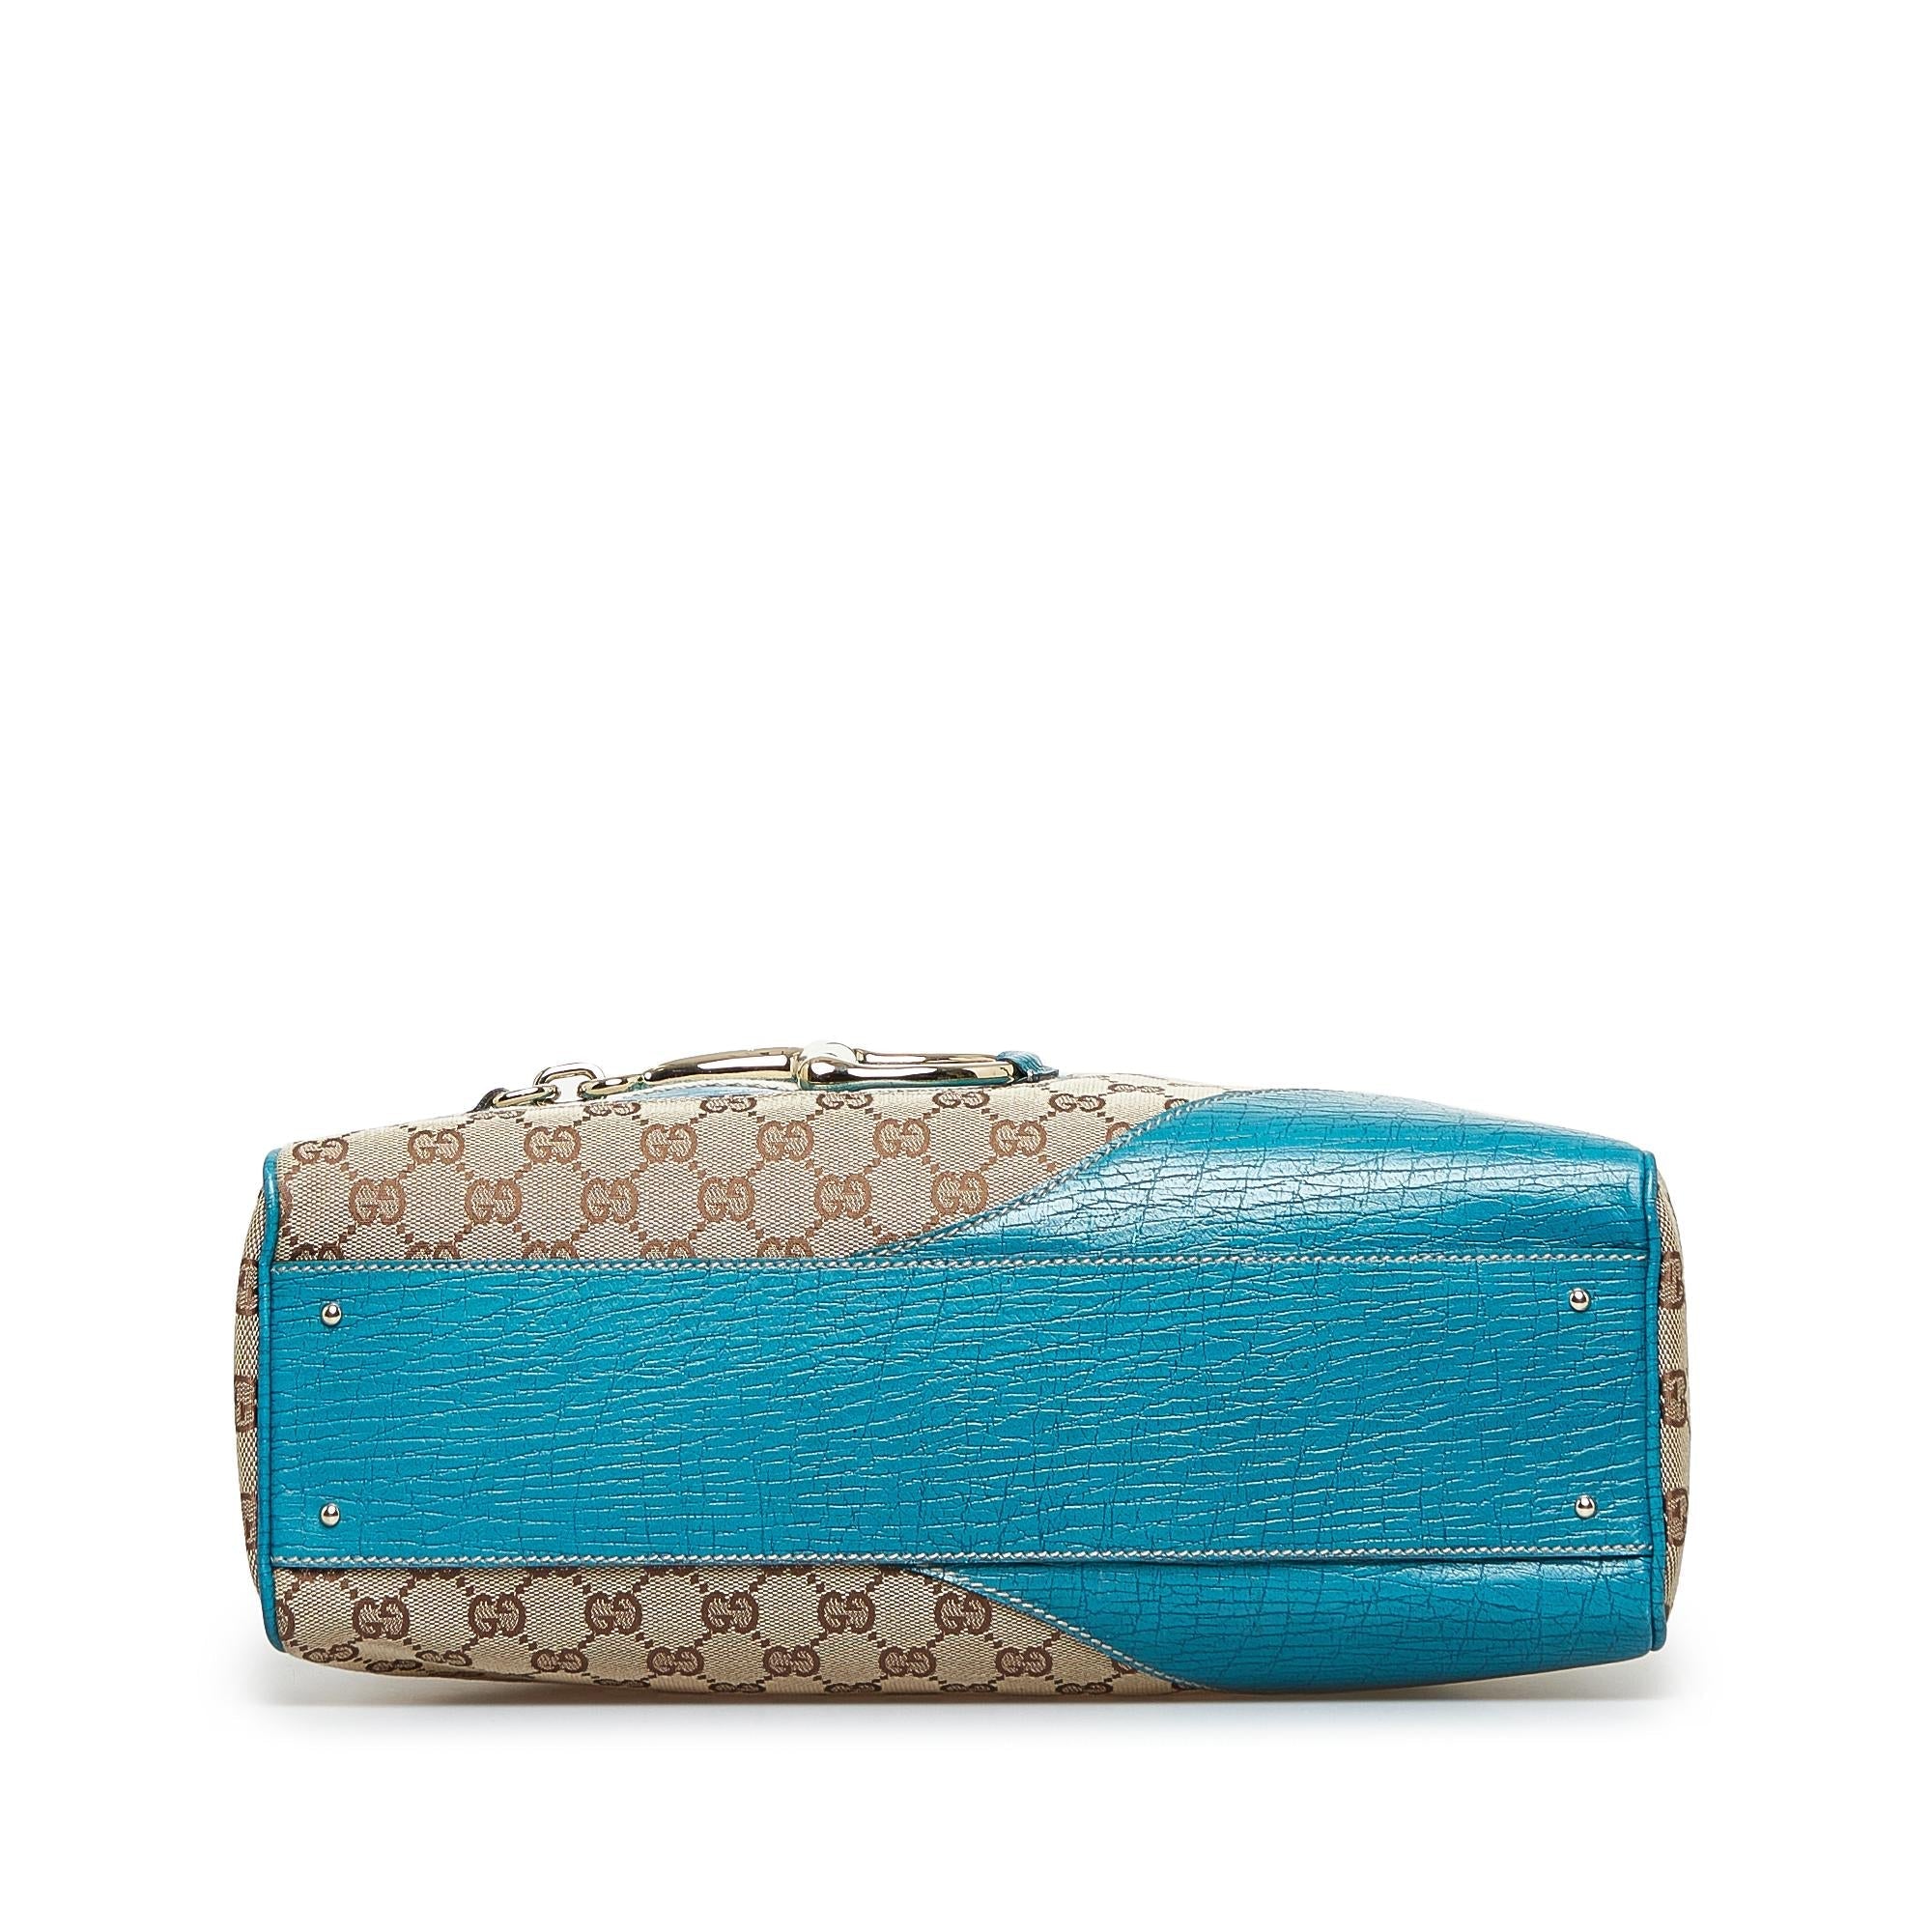 Gucci GG Canvas Hasler Handbag